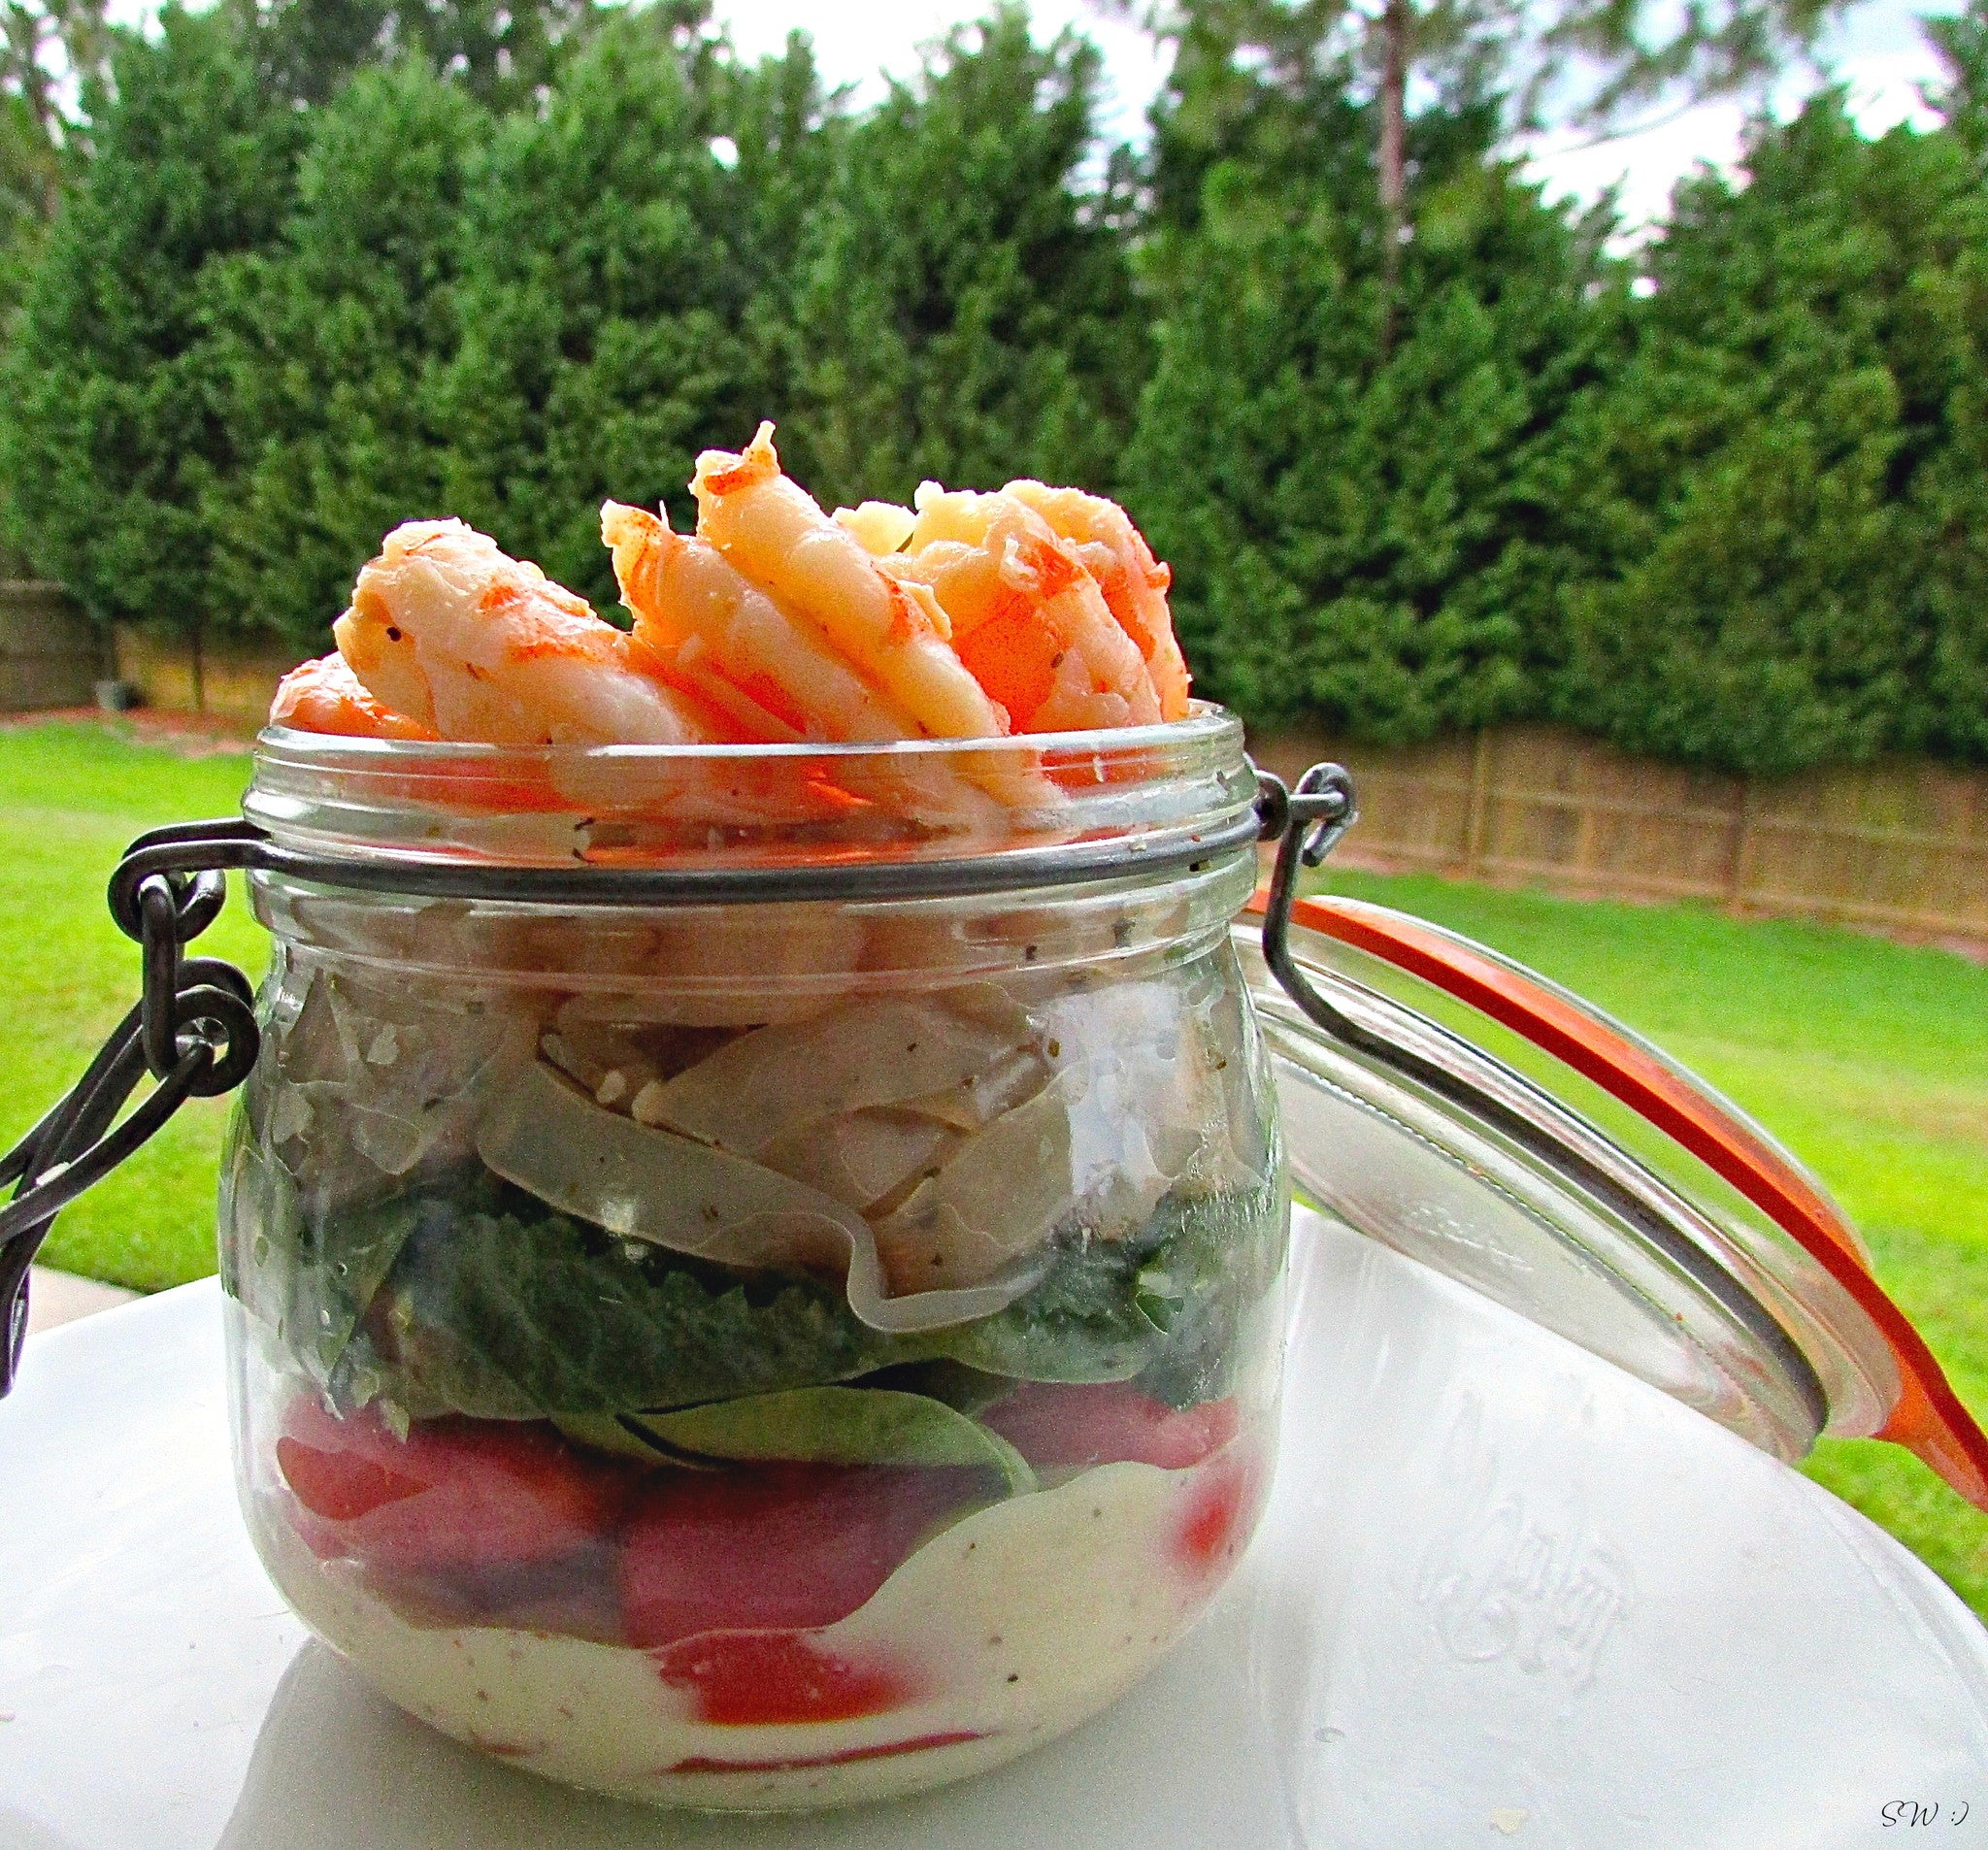 Shrimp & Fettuccini Kale Caesar Salad in a Jar